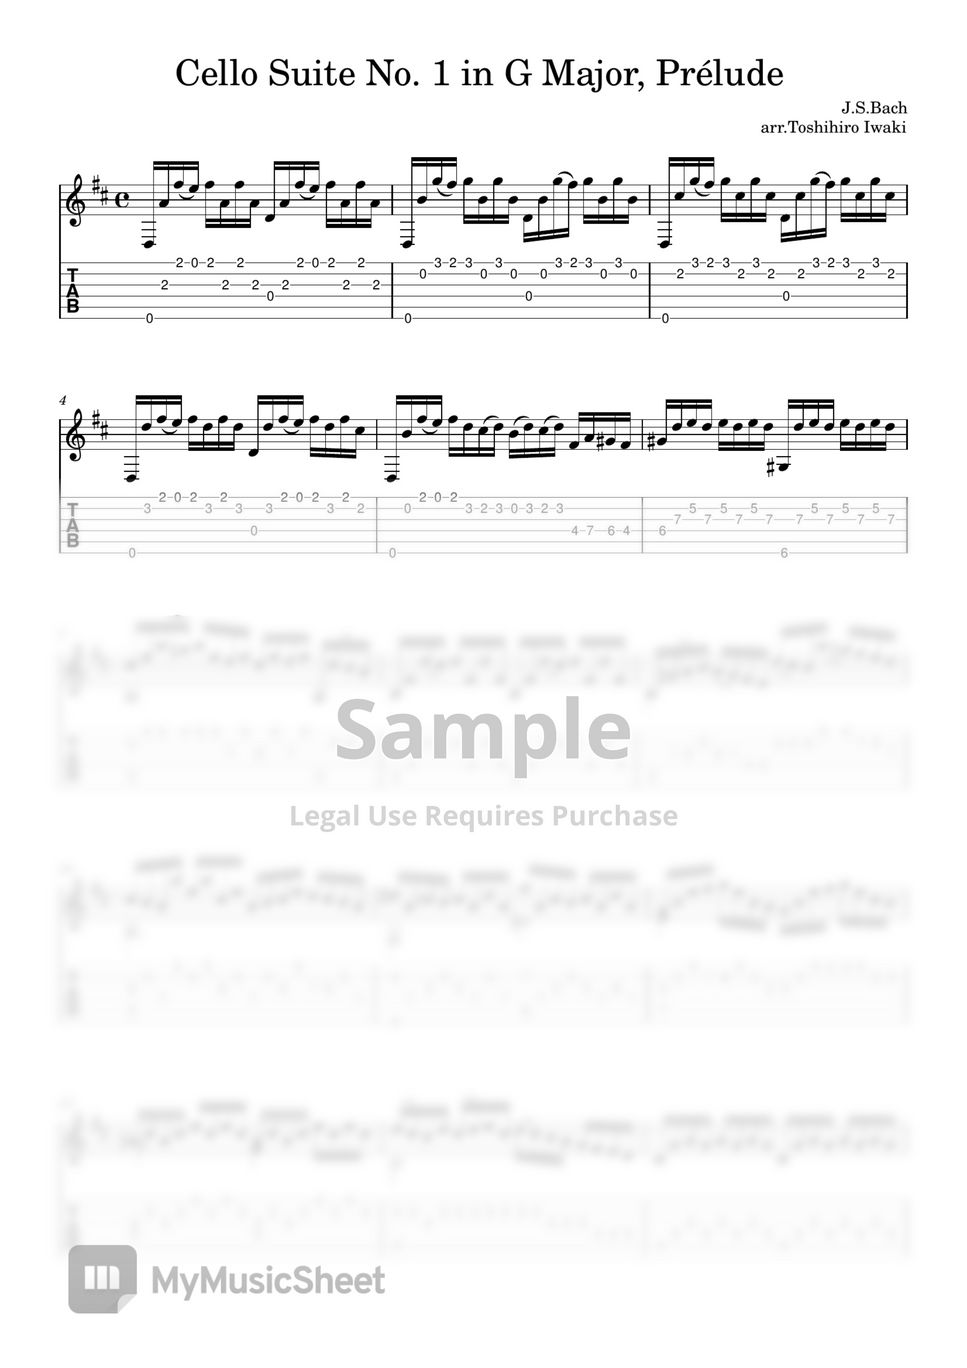 bach - Cello Suite No. 1 in G Major, Prélude by Toshihiro Iwaki